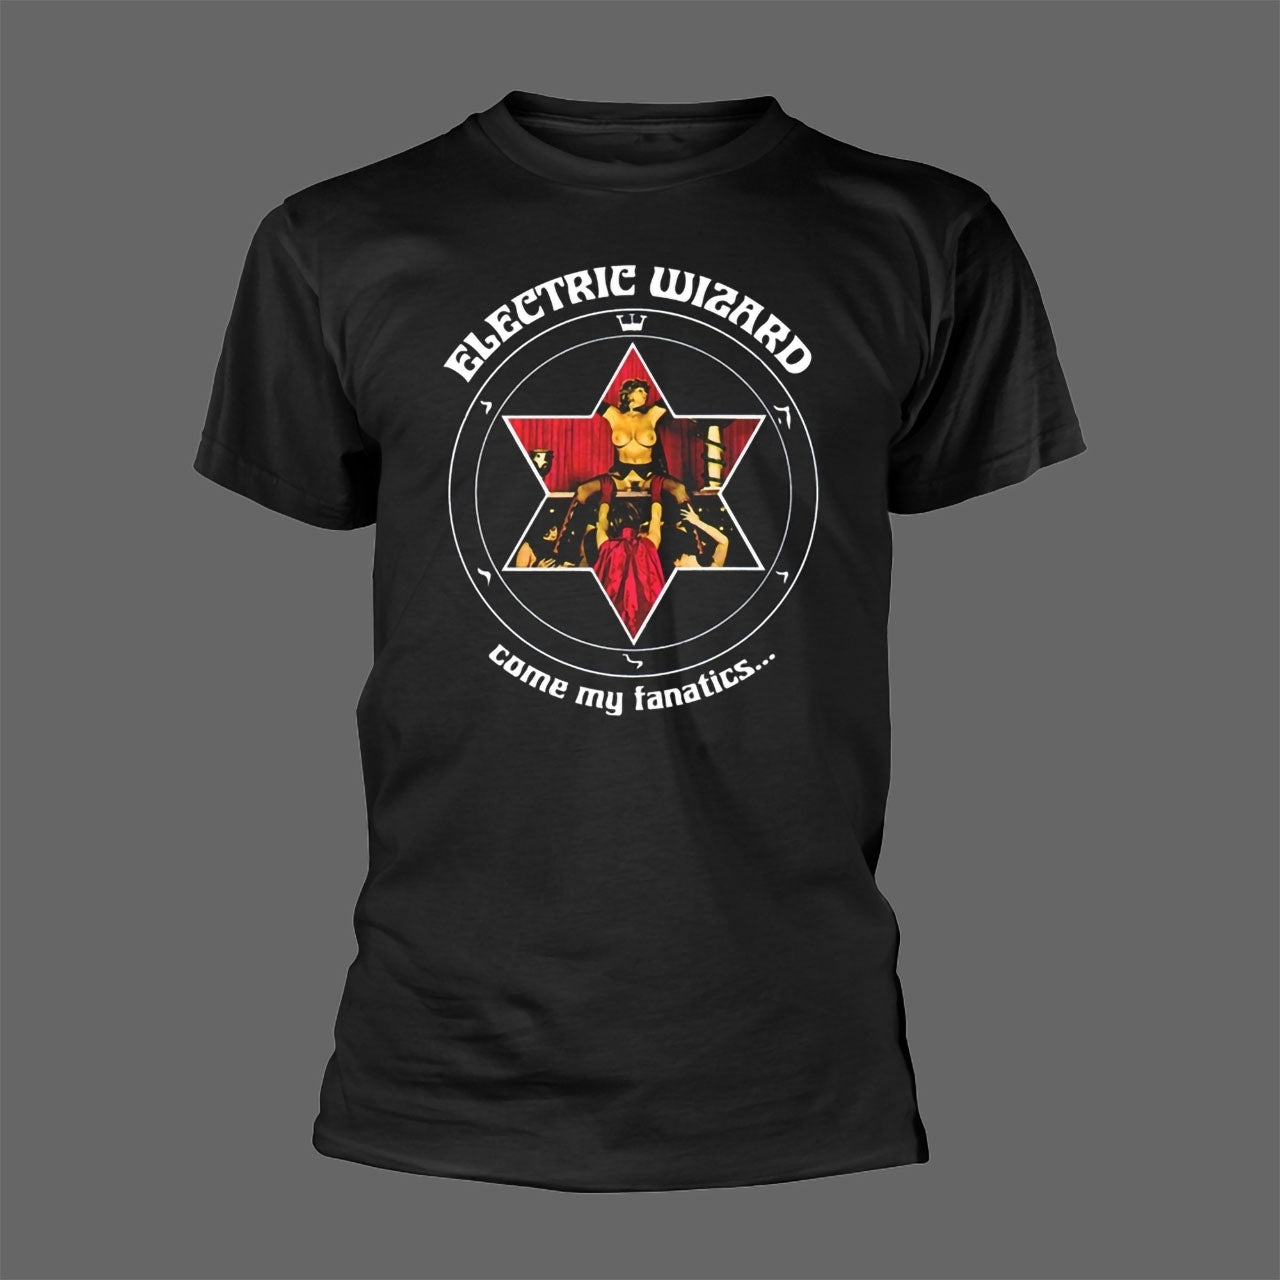 Electric Wizard - Come My Fanatics (T-Shirt)